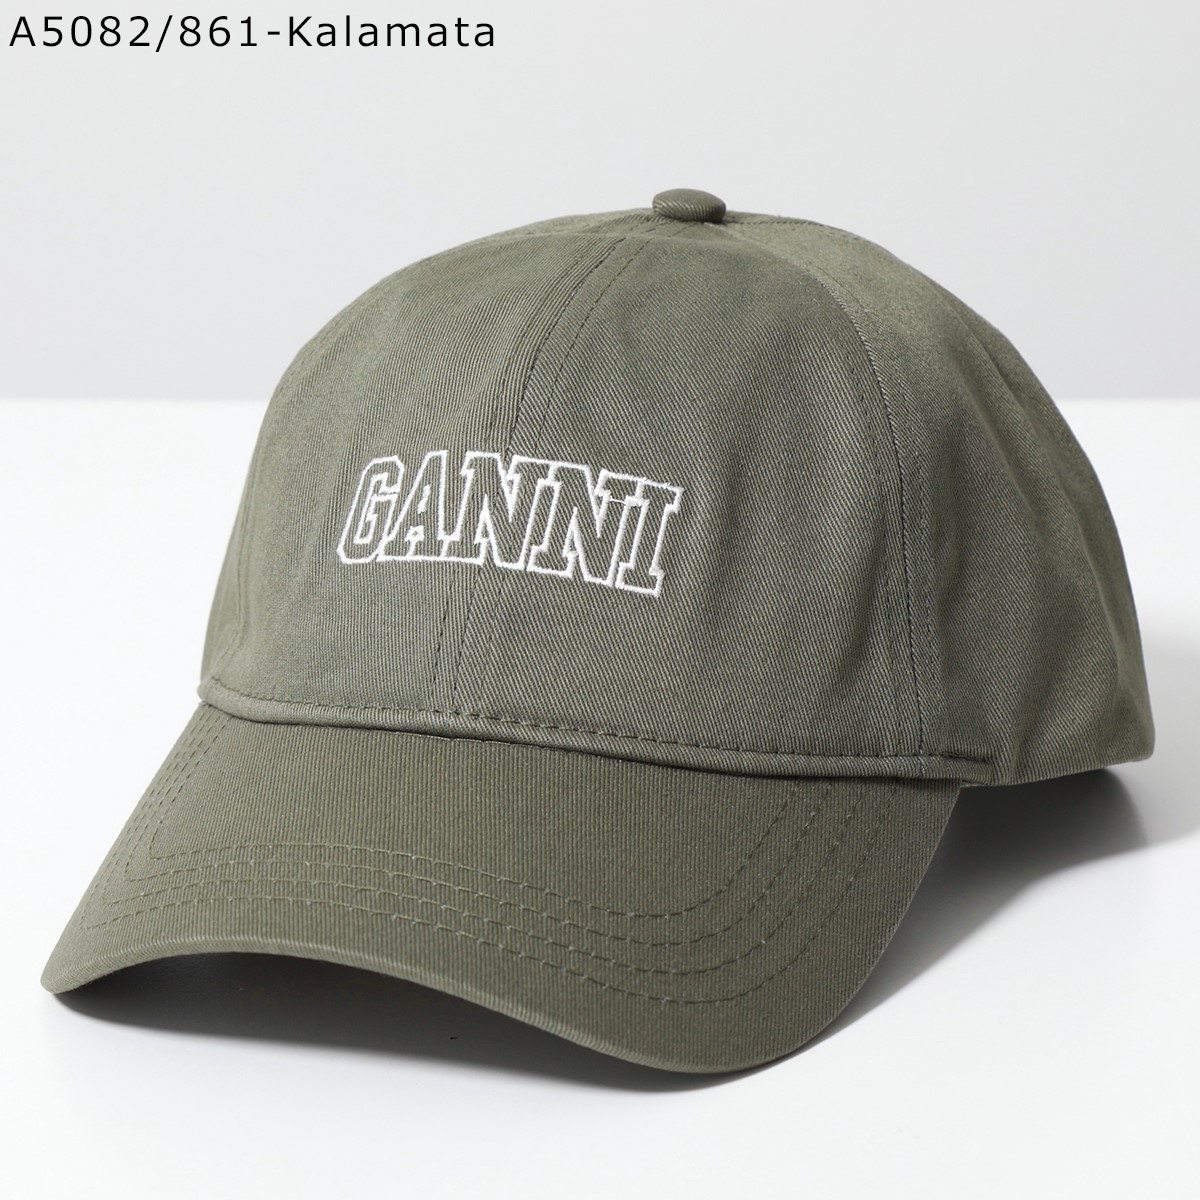 GANNI ガニー ベースボールキャップ Cap Hat A4603 5682 A5082 A4968 A5084 A5530 5890 レディース  コットン ロゴ 刺繍 帽子 カラー5色